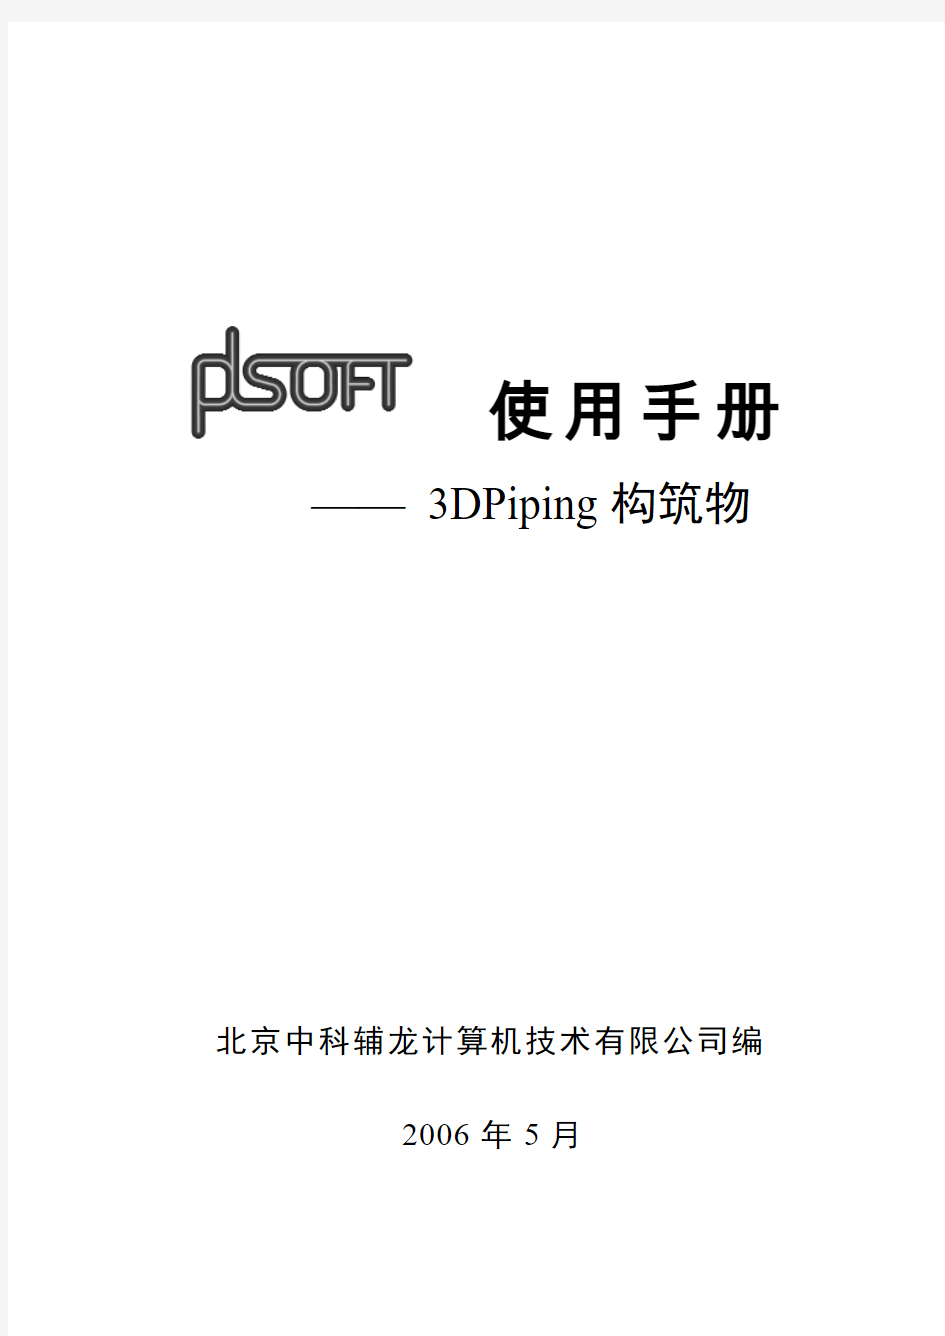 A06-PDSOFT 3DPiping使用手册《第六部分 构筑物》131-188